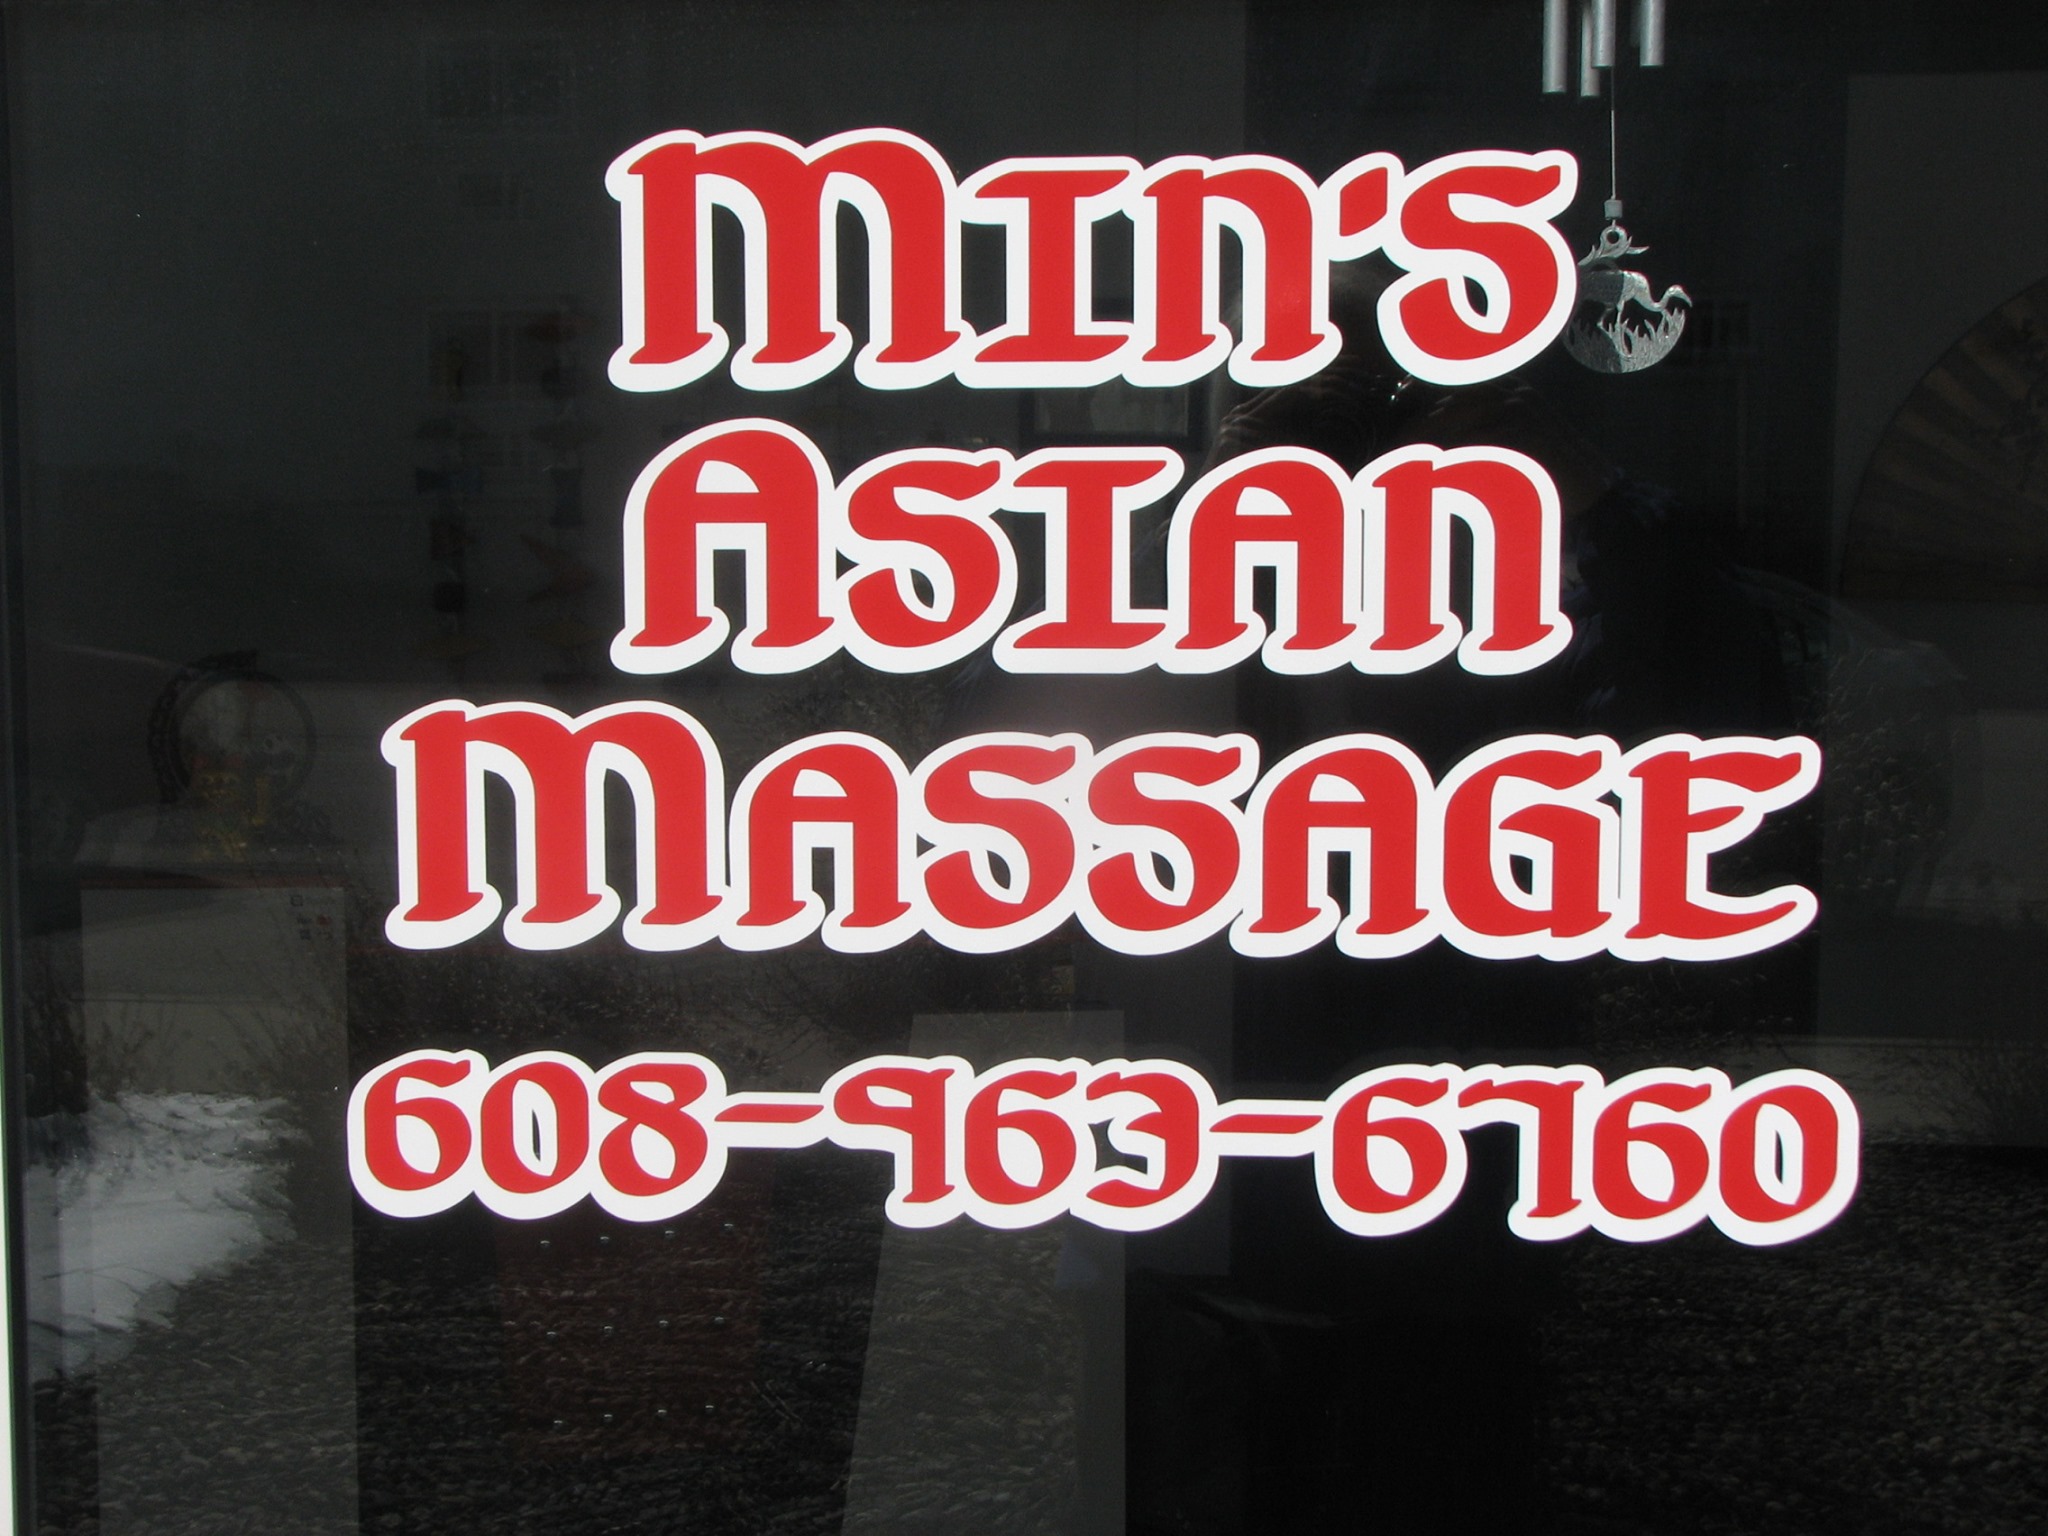 Min's Asian Massage 793 Plum St, Wisconsin Dells Wisconsin 53965